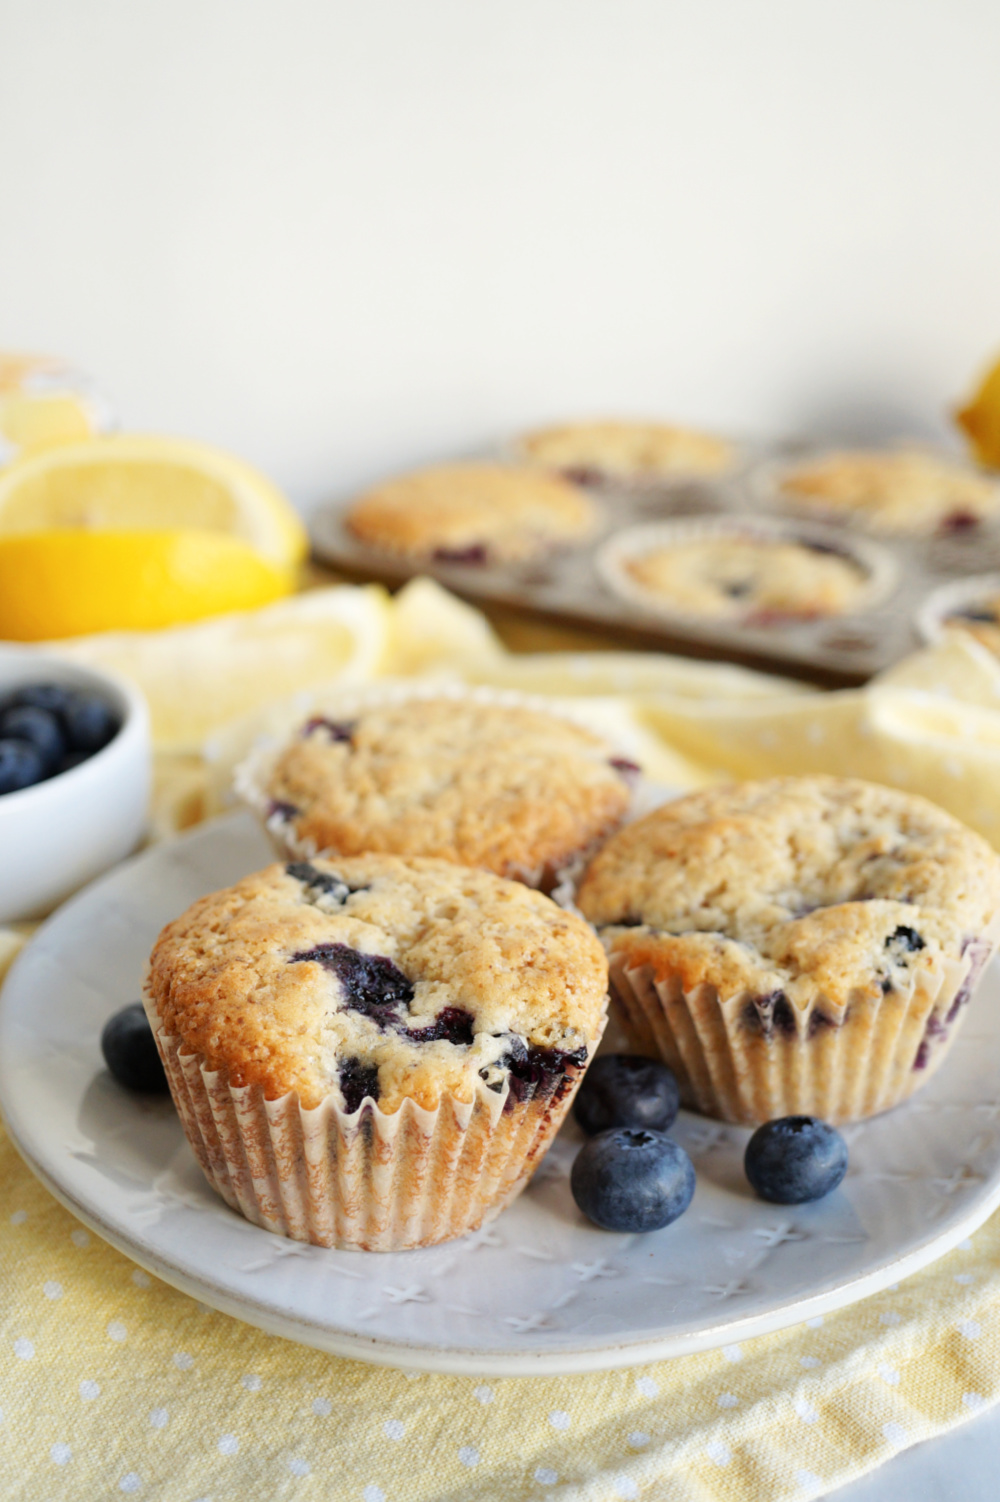 lemon blueberry muffins on plate